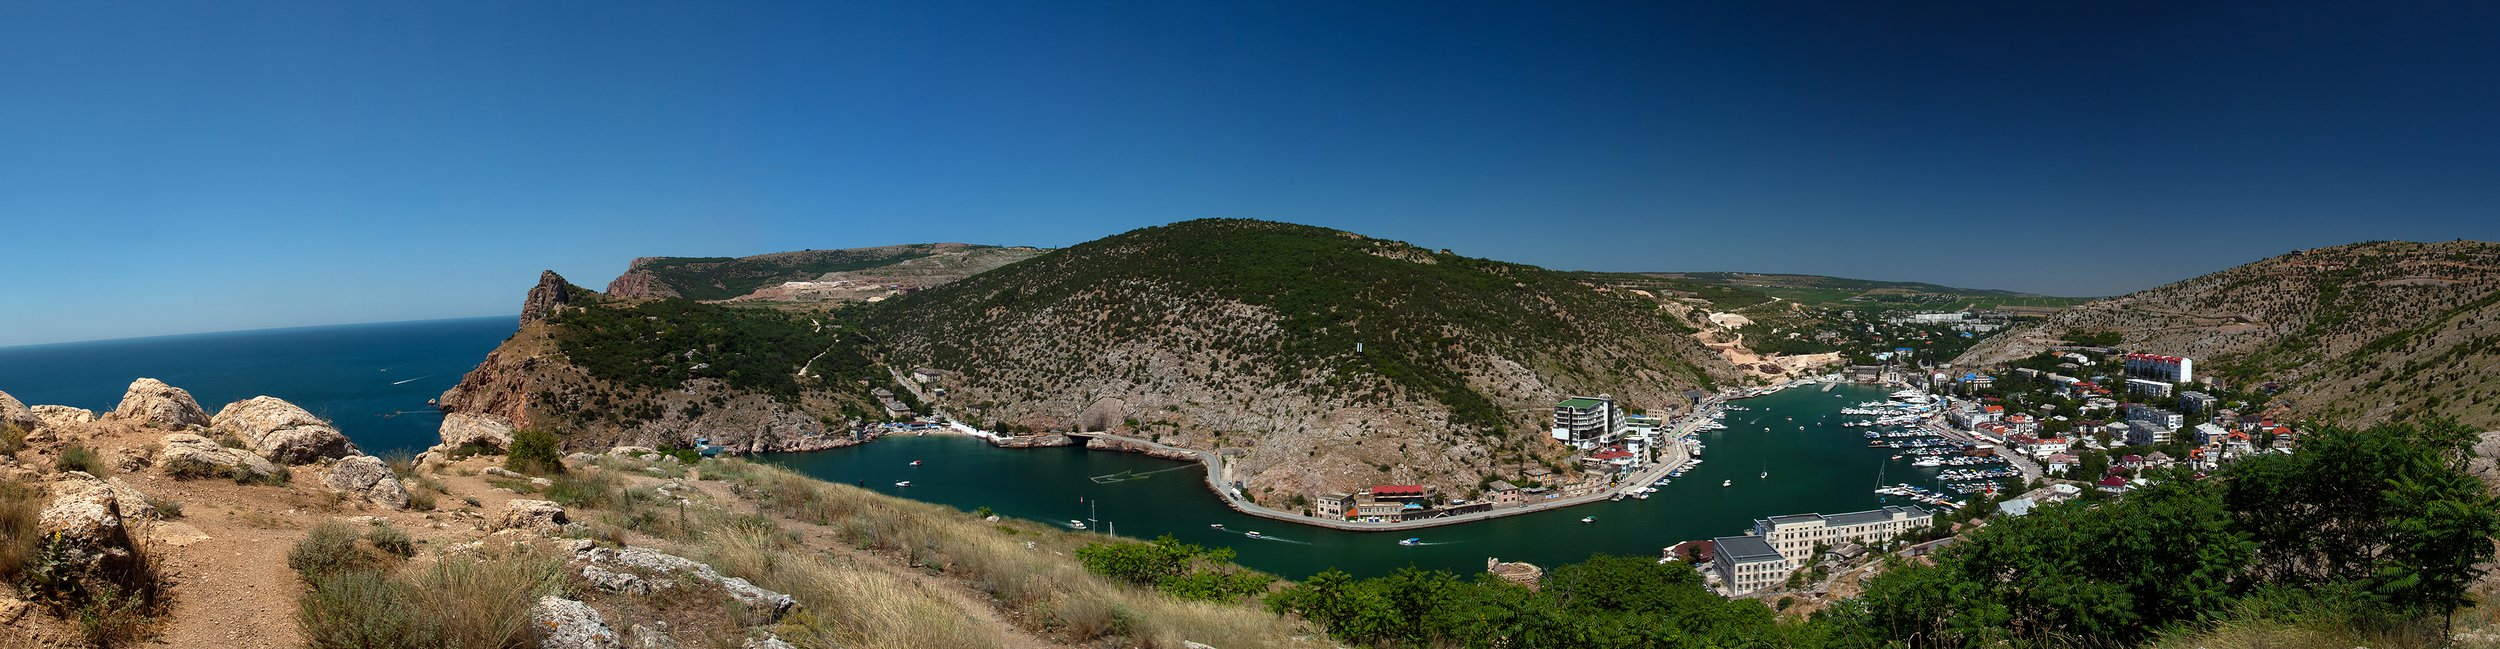 Панорамный вид на бухту Балаклавы с высоты Чембало